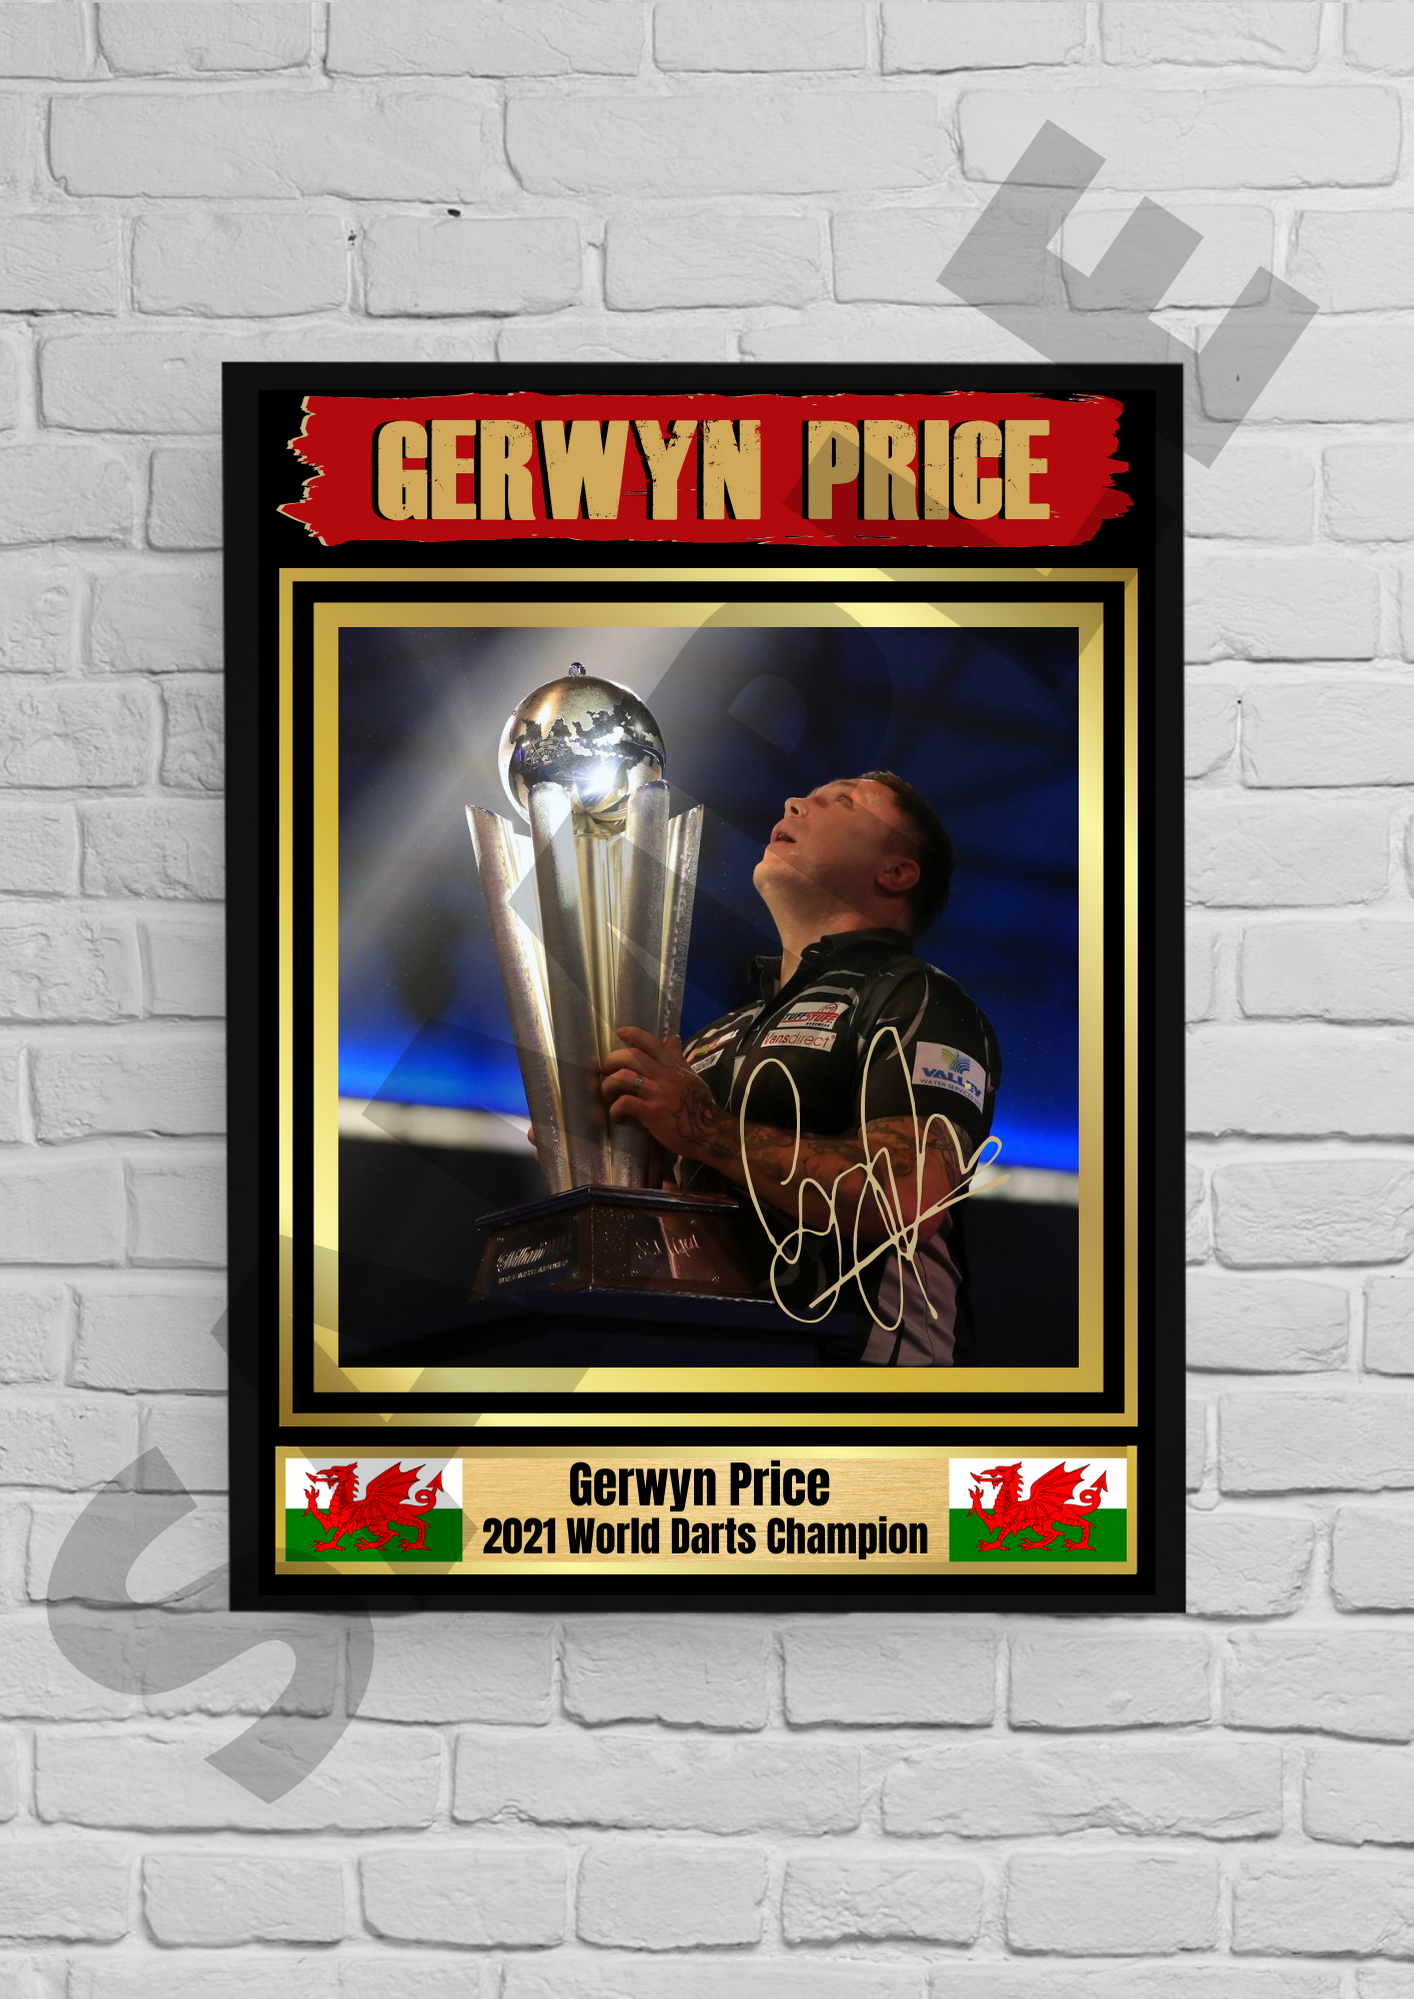 Gerwyn Price (Darts) Collectable/Memorabilia #4 - Signed print